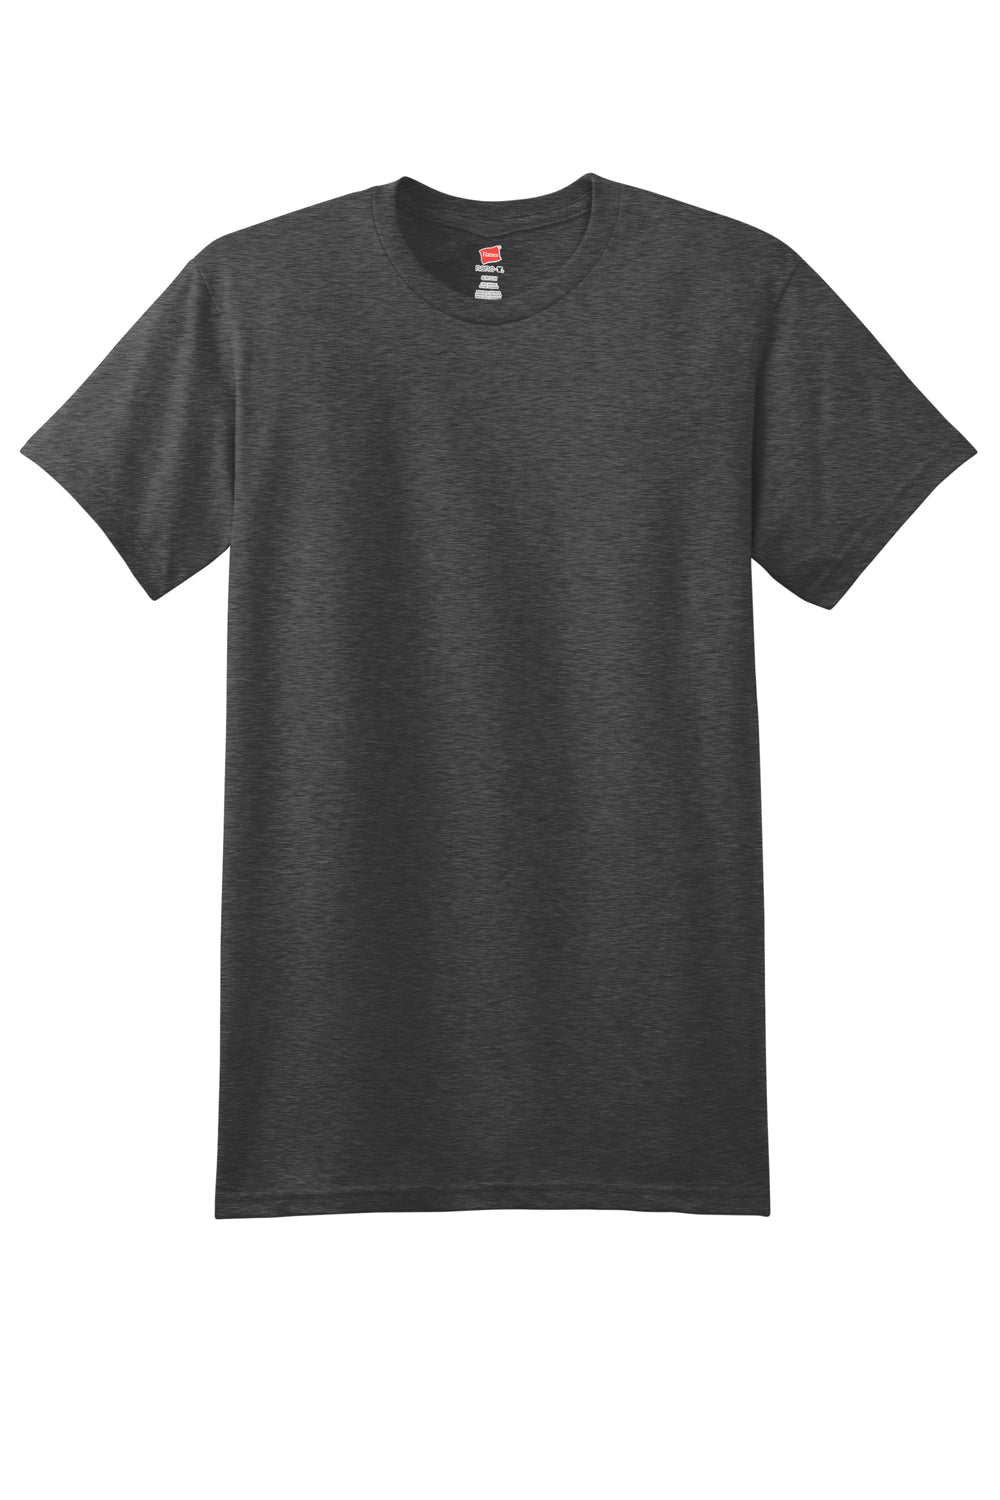 Hanes 4980 Mens Nano-T Short Sleeve Crewneck T-Shirt Heather Charcoal Grey Flat Front